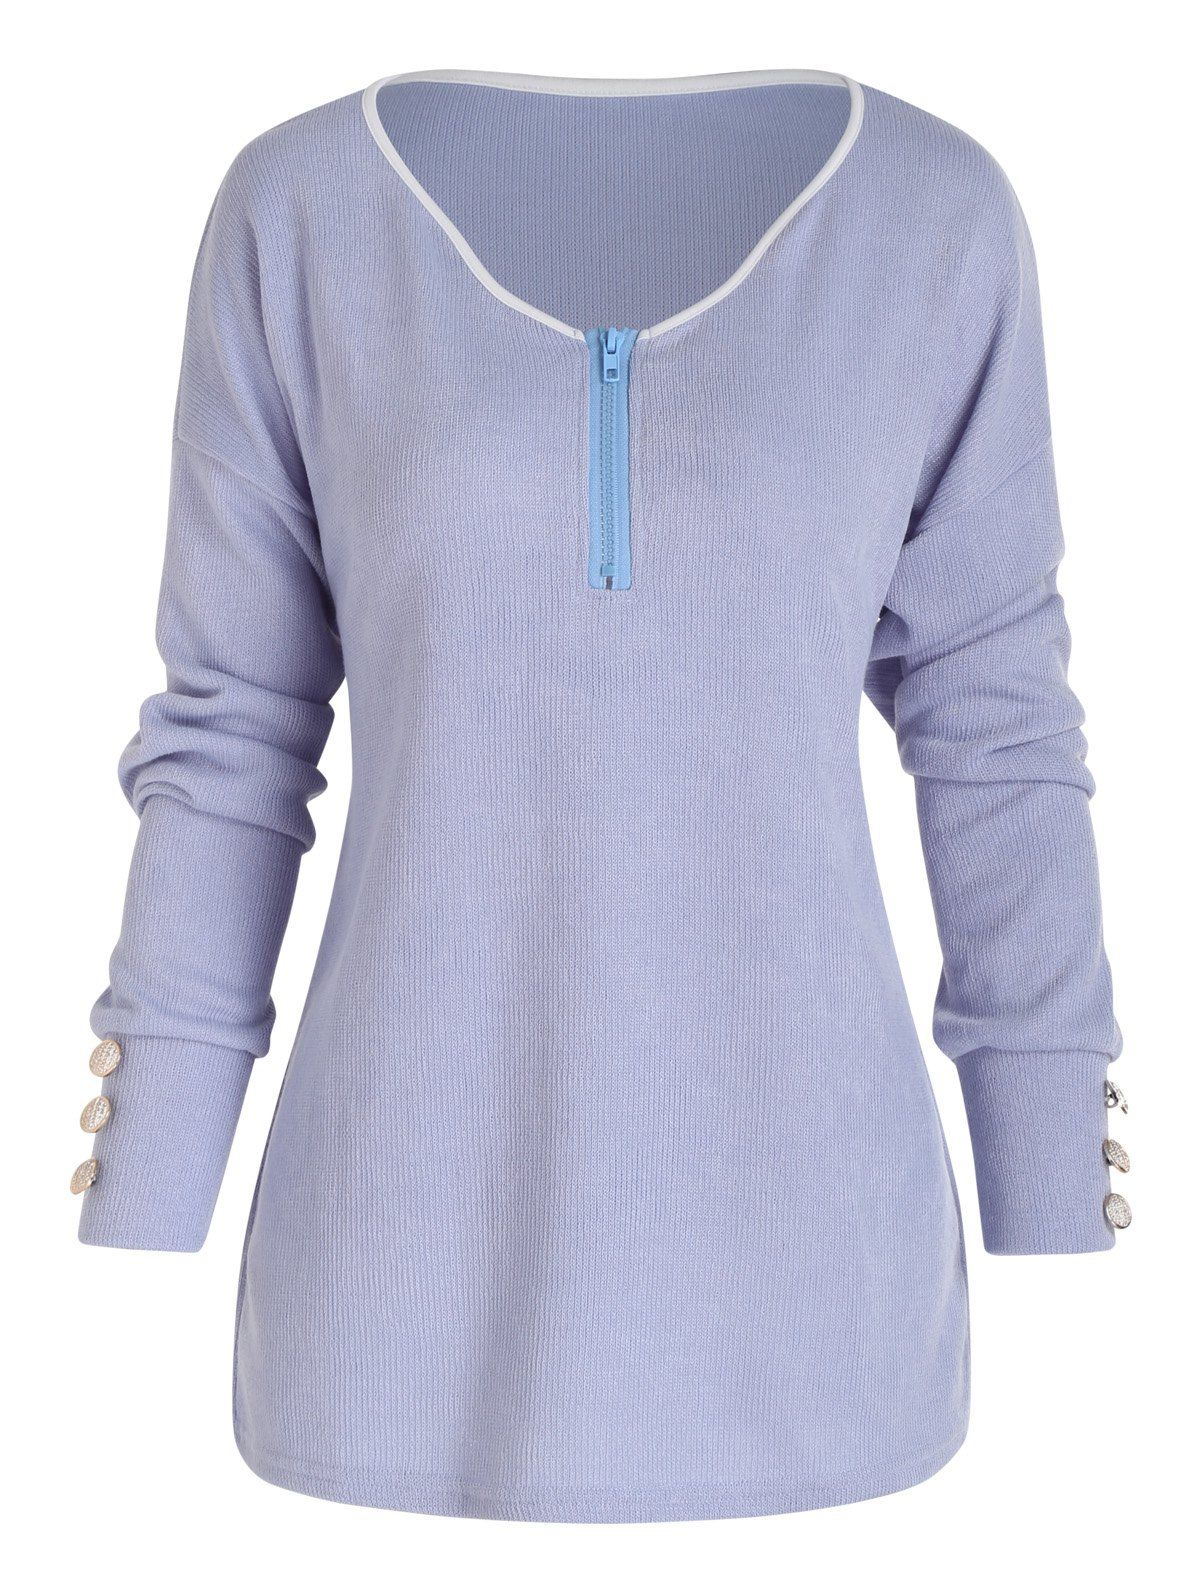 Drop Shoulder Knitwear A Quarter Zip Contrast V Neck Mock Button Long Sleeve Knit Top - BLUE 3XL